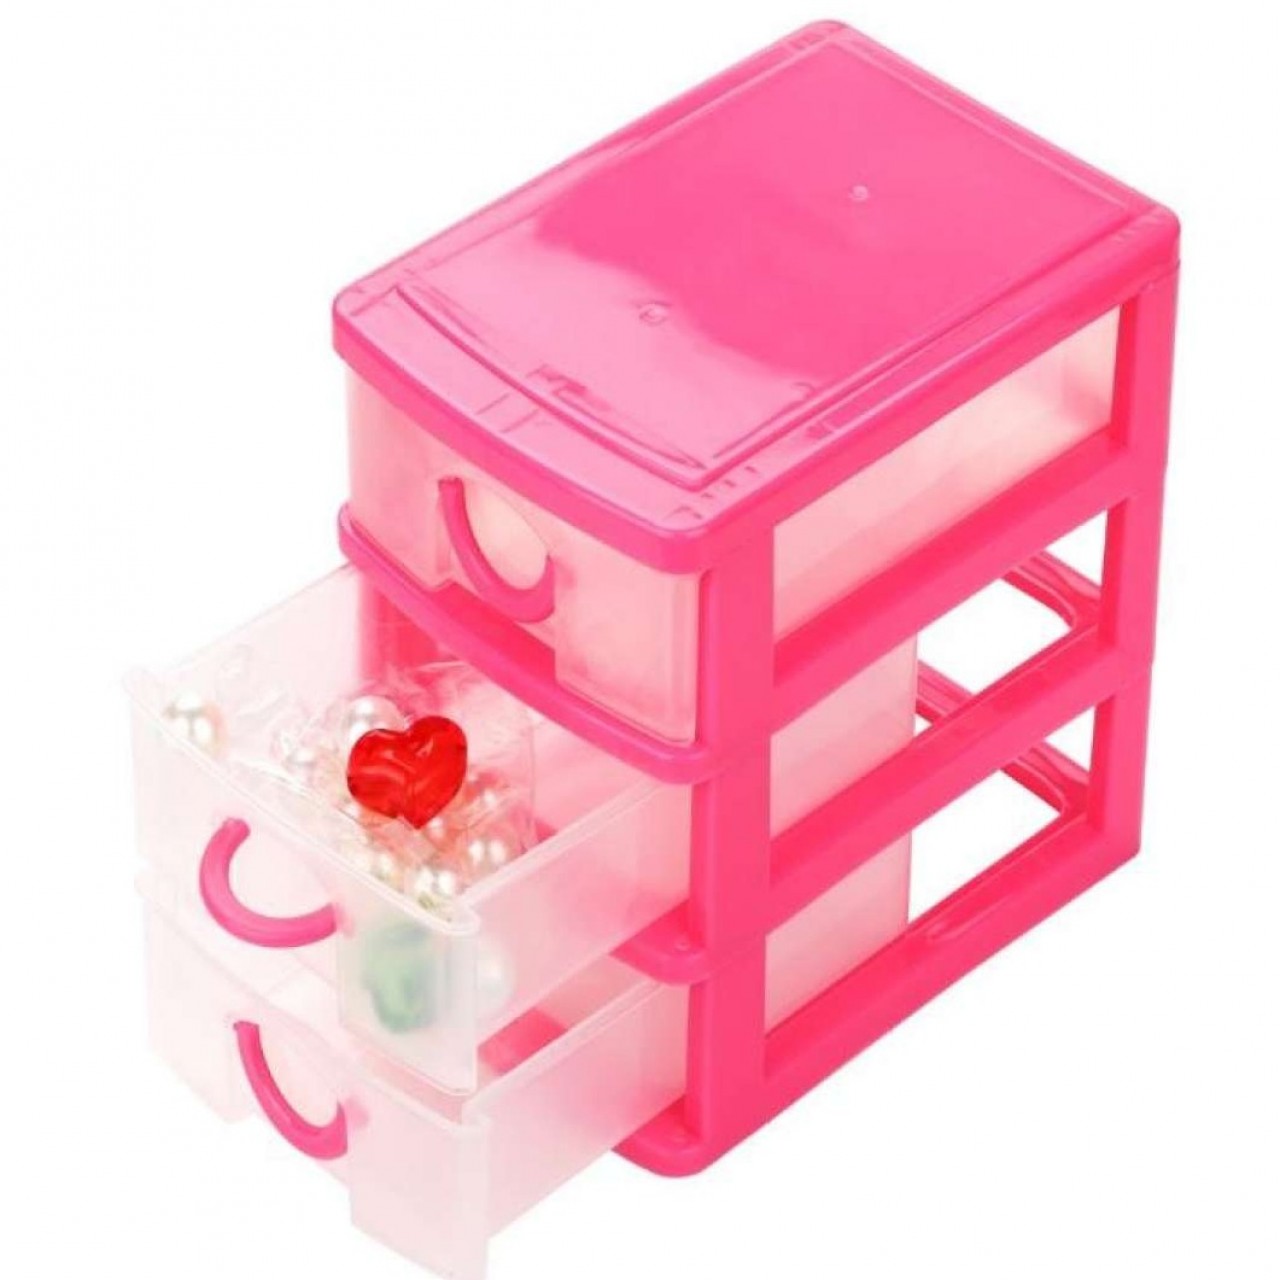 3 Drawers Jewelry Box - Pink - Compact